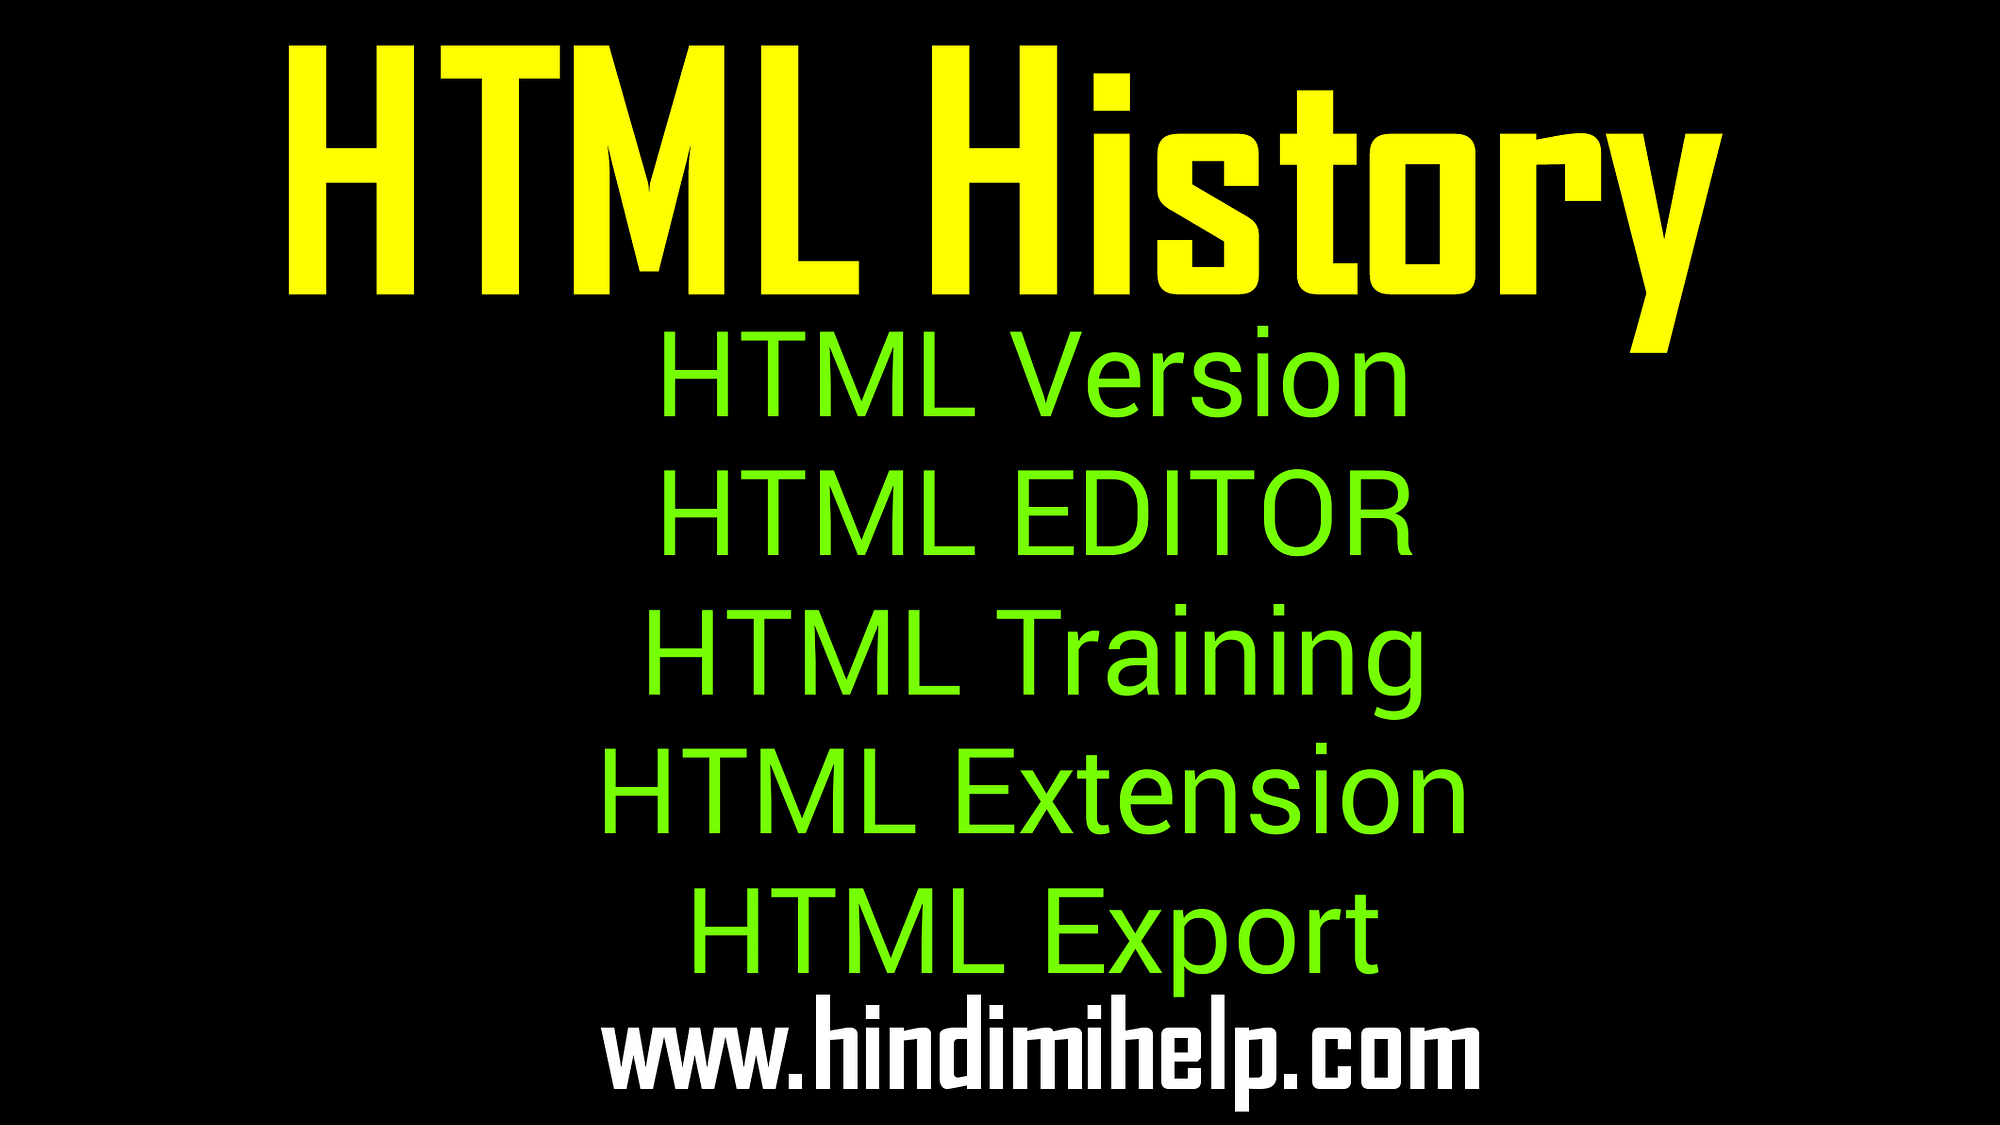 HIstory of Html hindi mi help